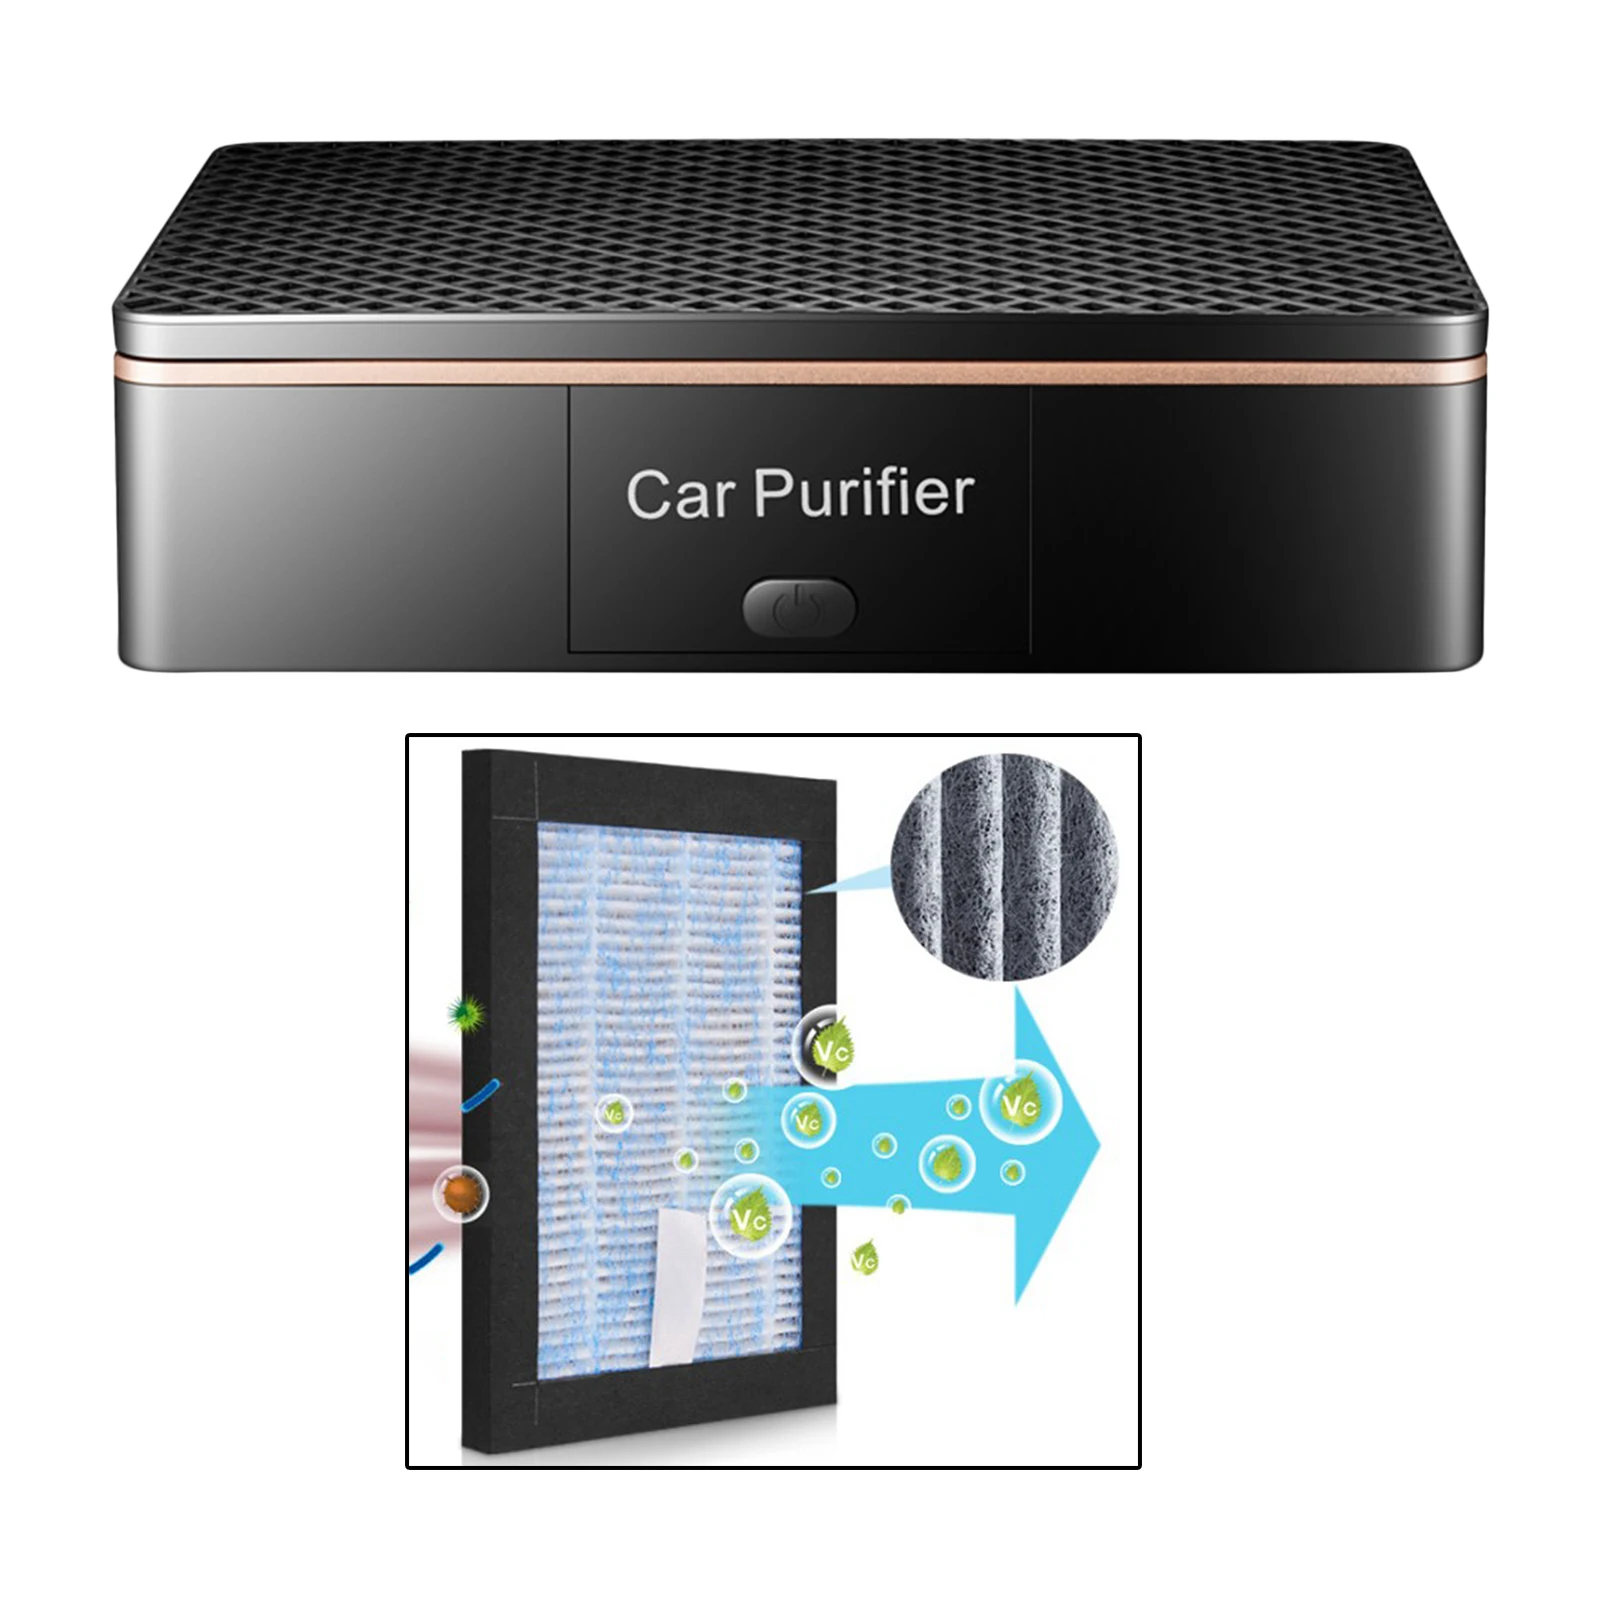 Portable Vehicle Car Air Purifier Air Freshener Deodorizer for Home Office 180x128x48mm